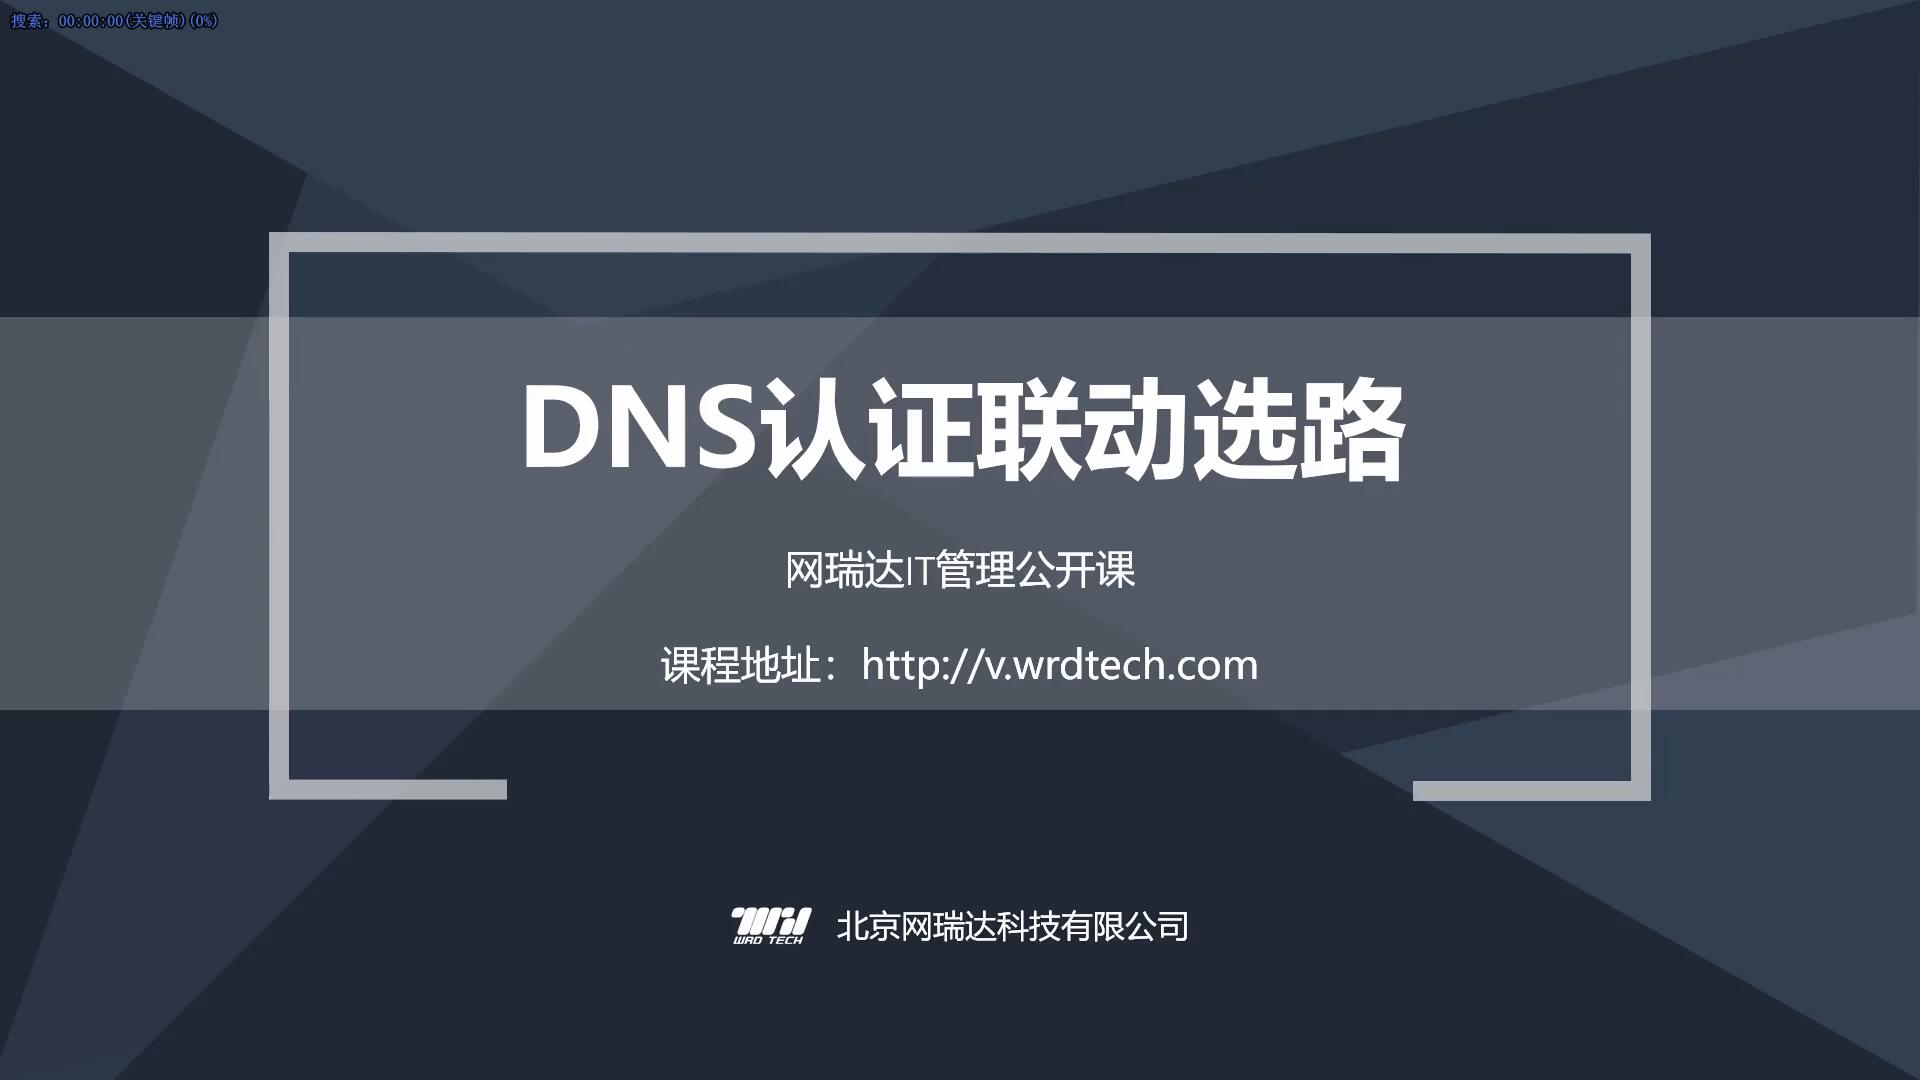 070-DNS-认证联动选路